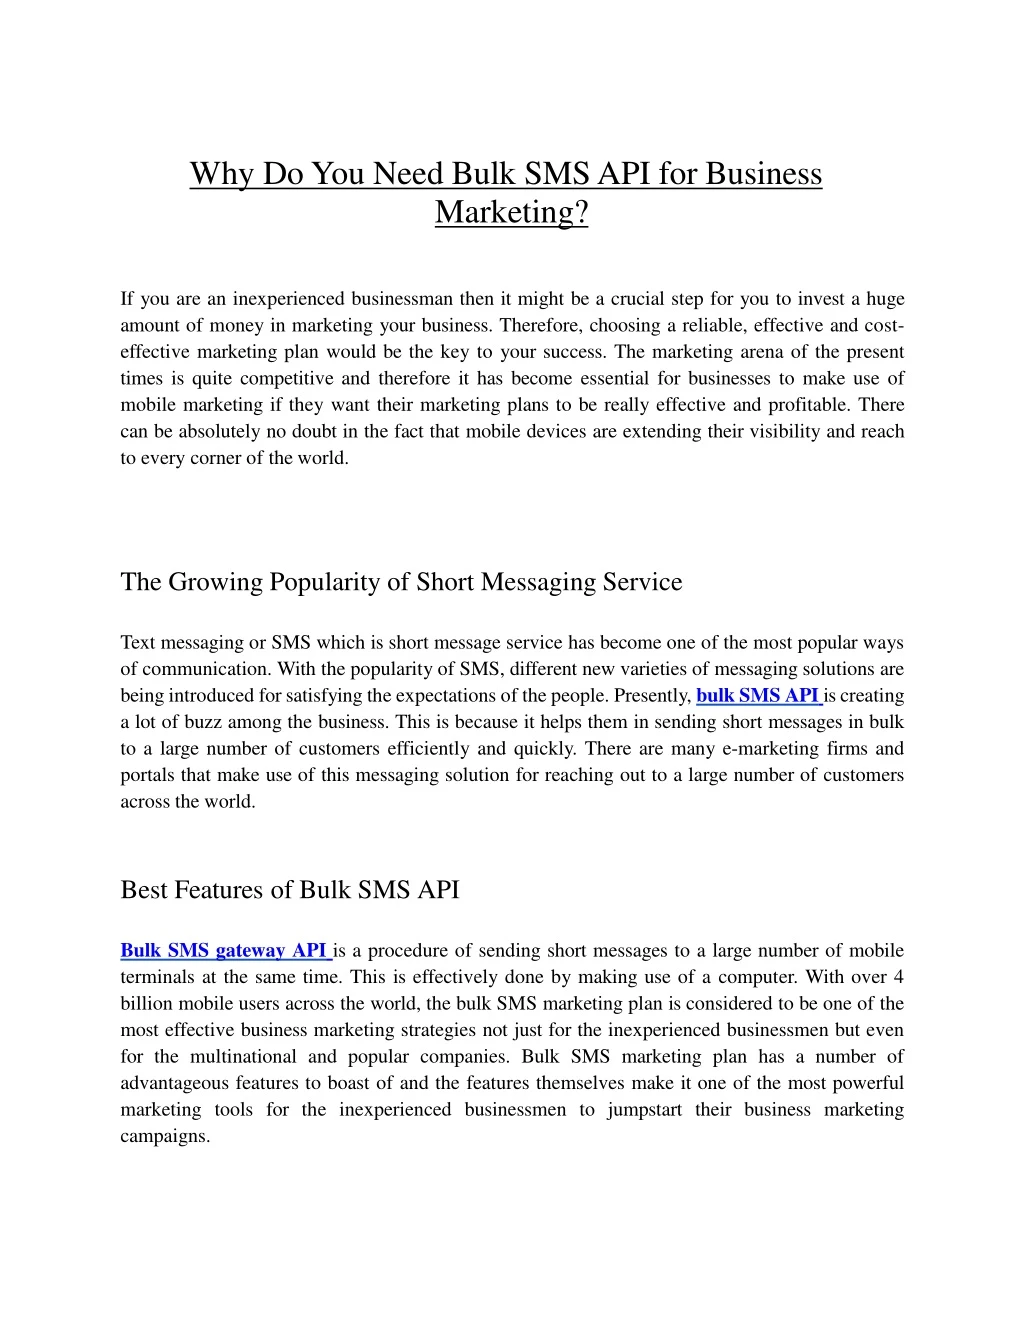 why do you need bulk sms api for business